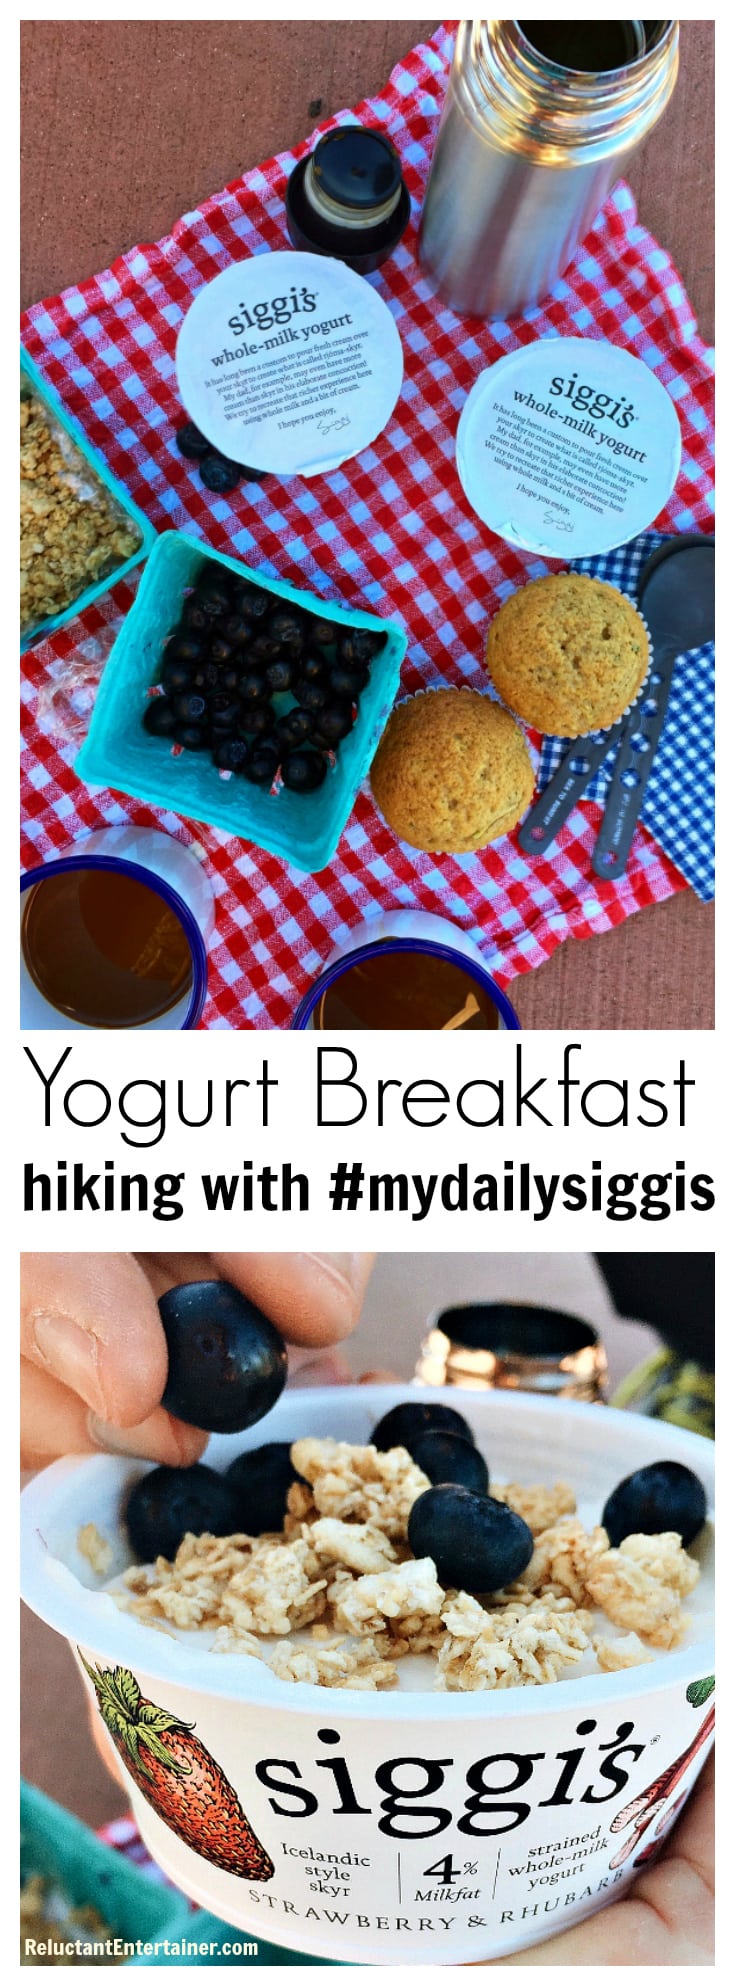 Yogurt Breakfast: Hiking with #mydailysiggis